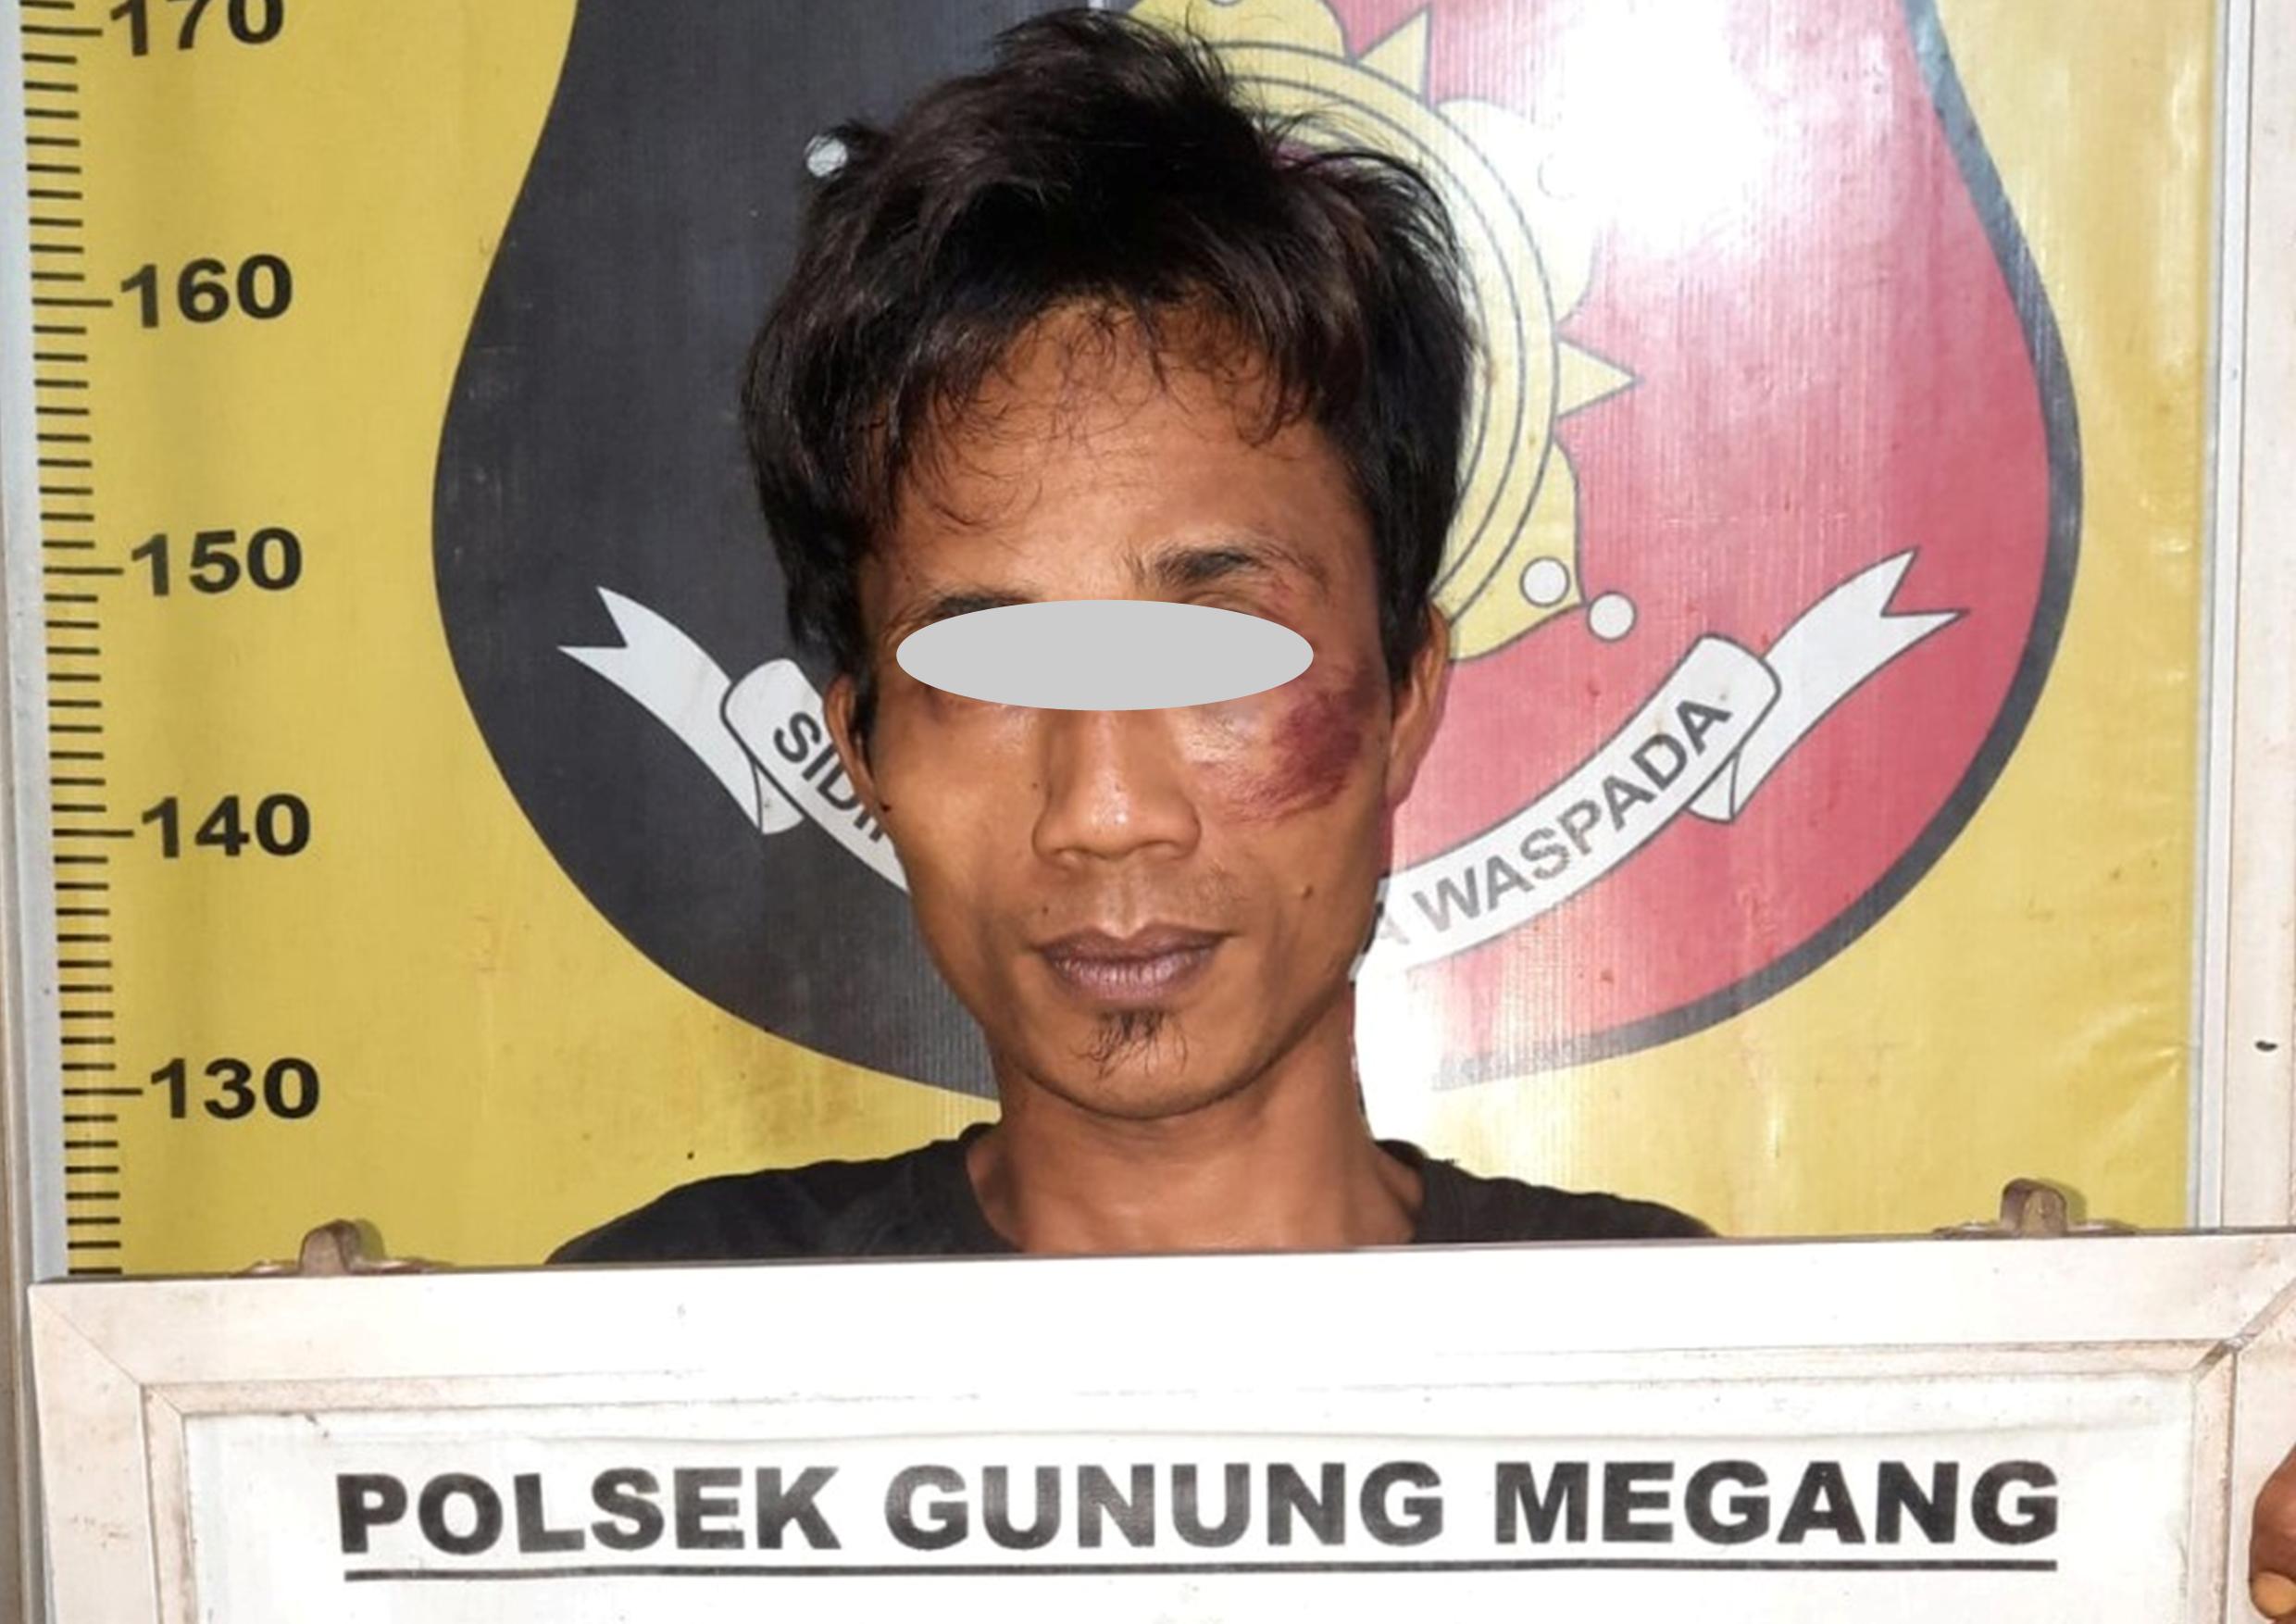 Team Trabazz Polsek Gunung Megang Tangkap Pencuri Pipa Pertamina